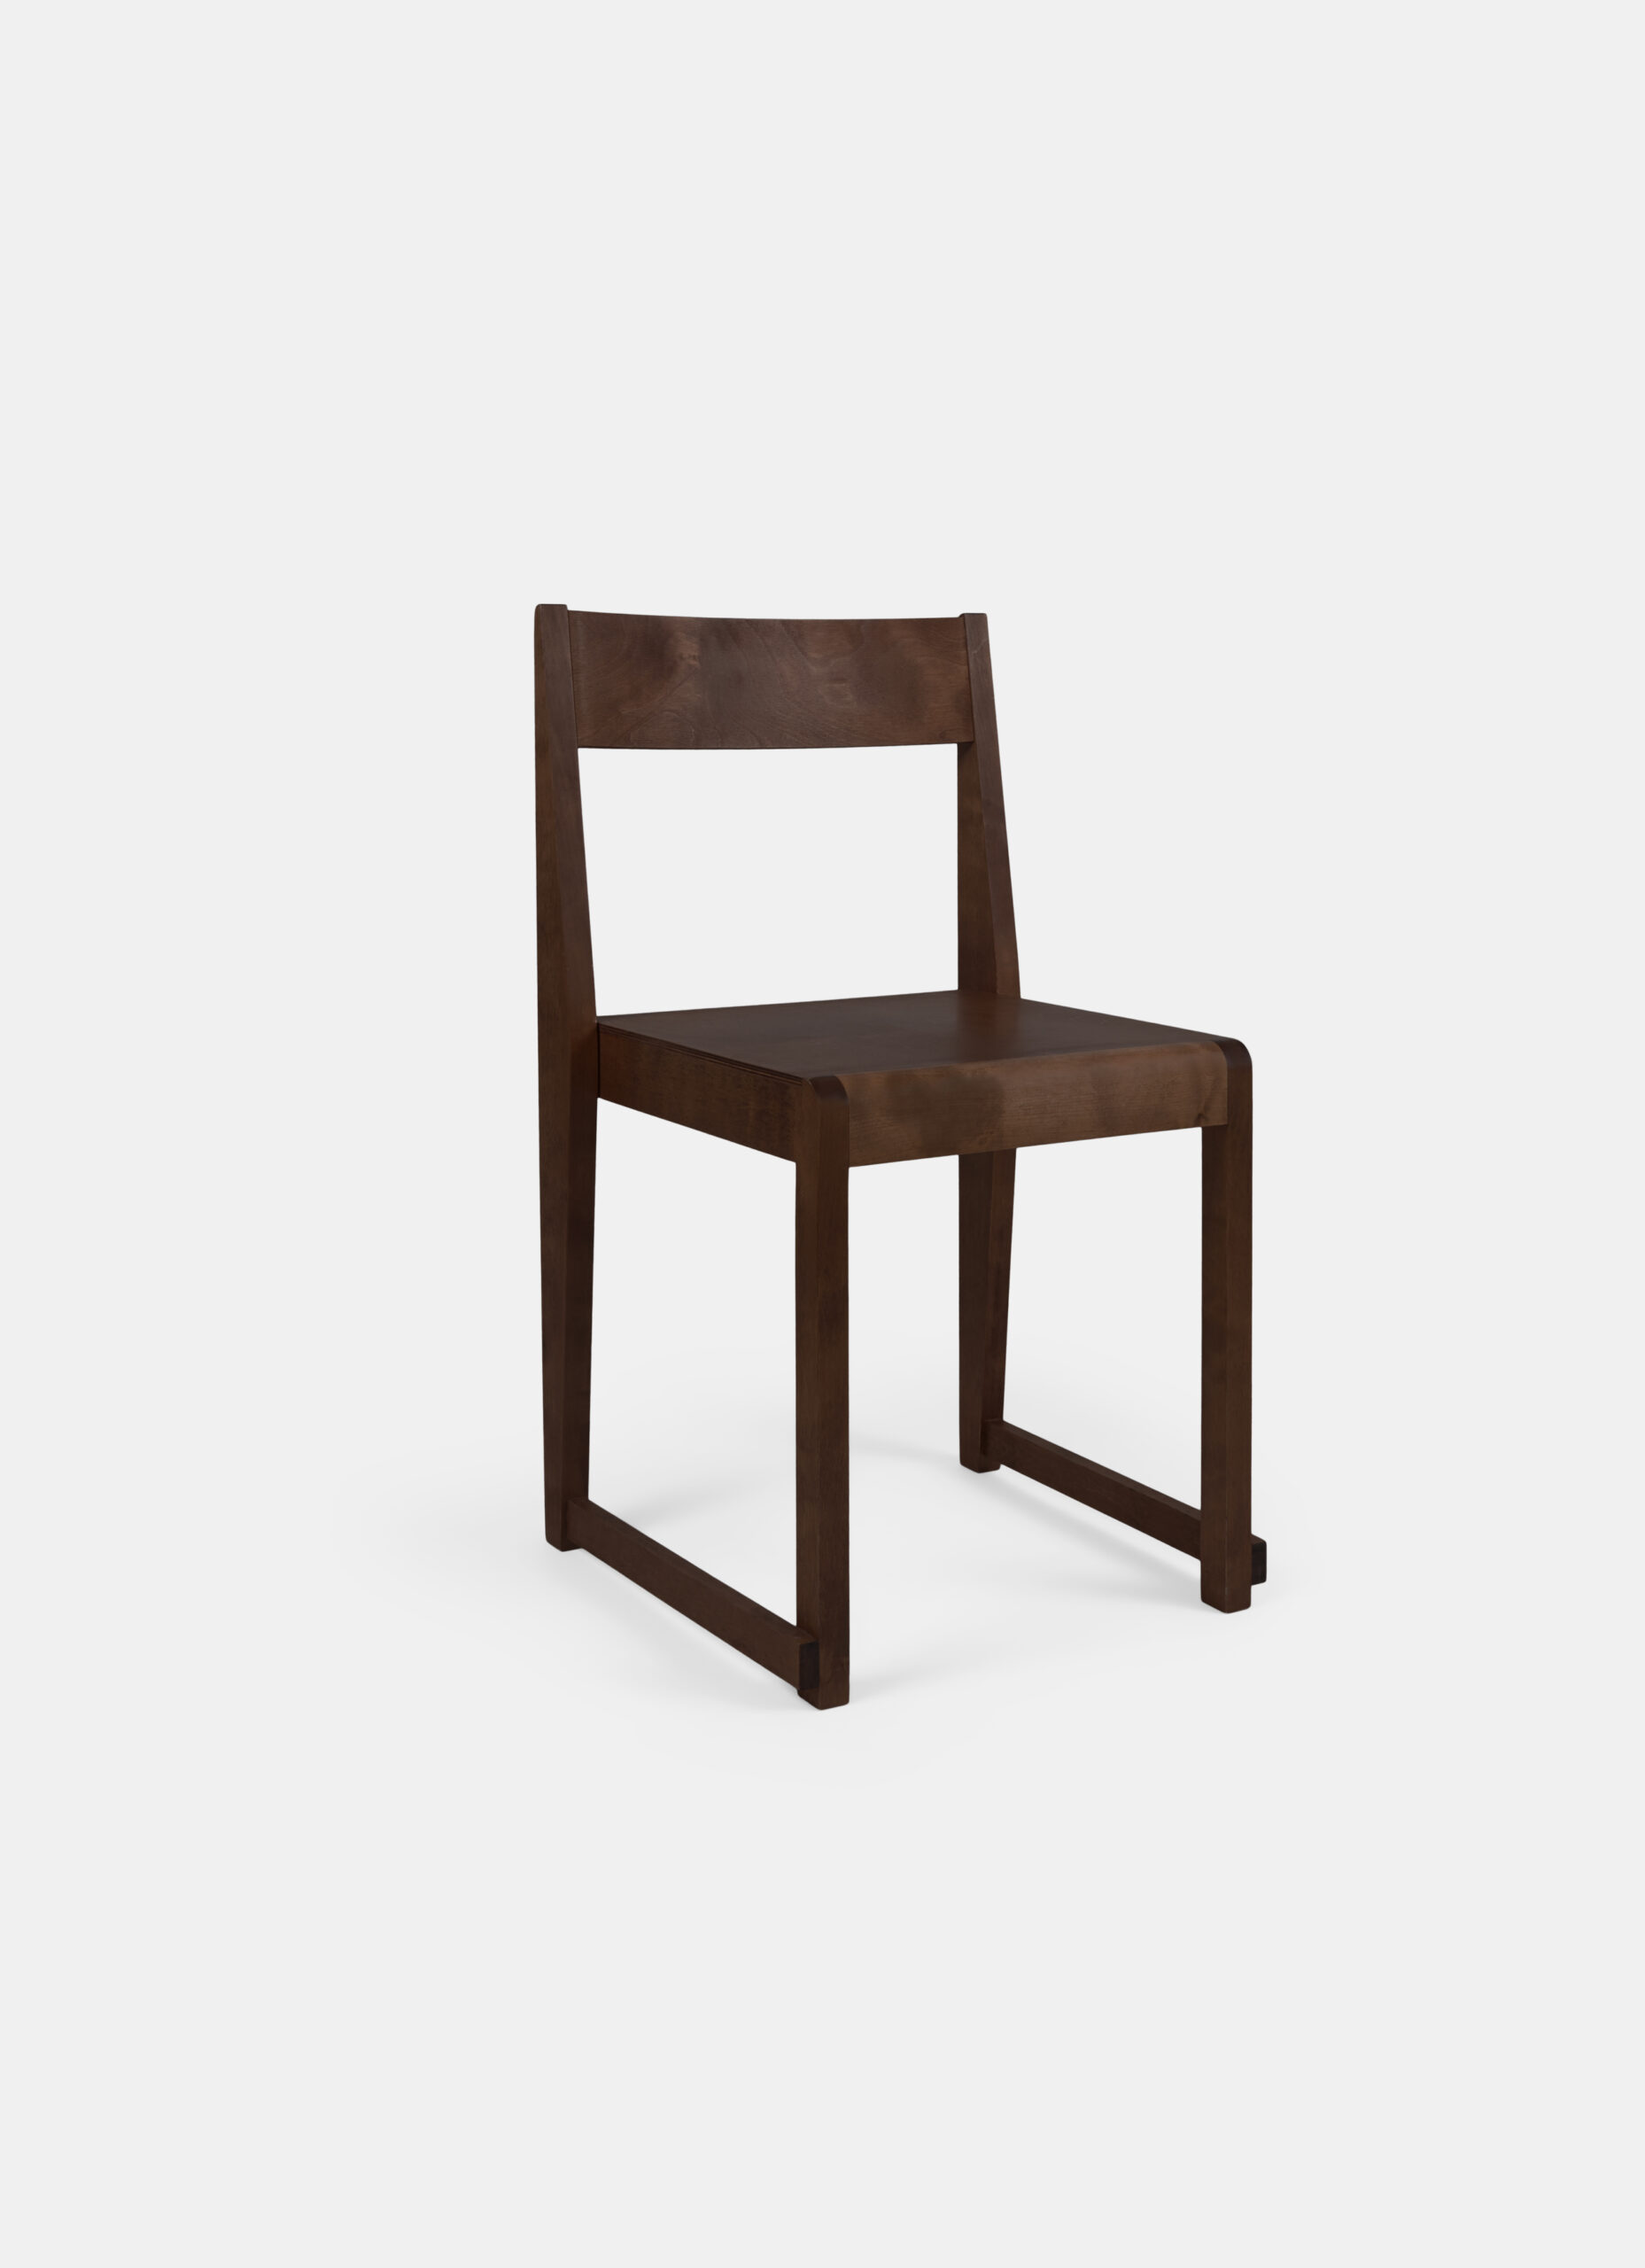 Frama - Chair 01 - Dark Birch